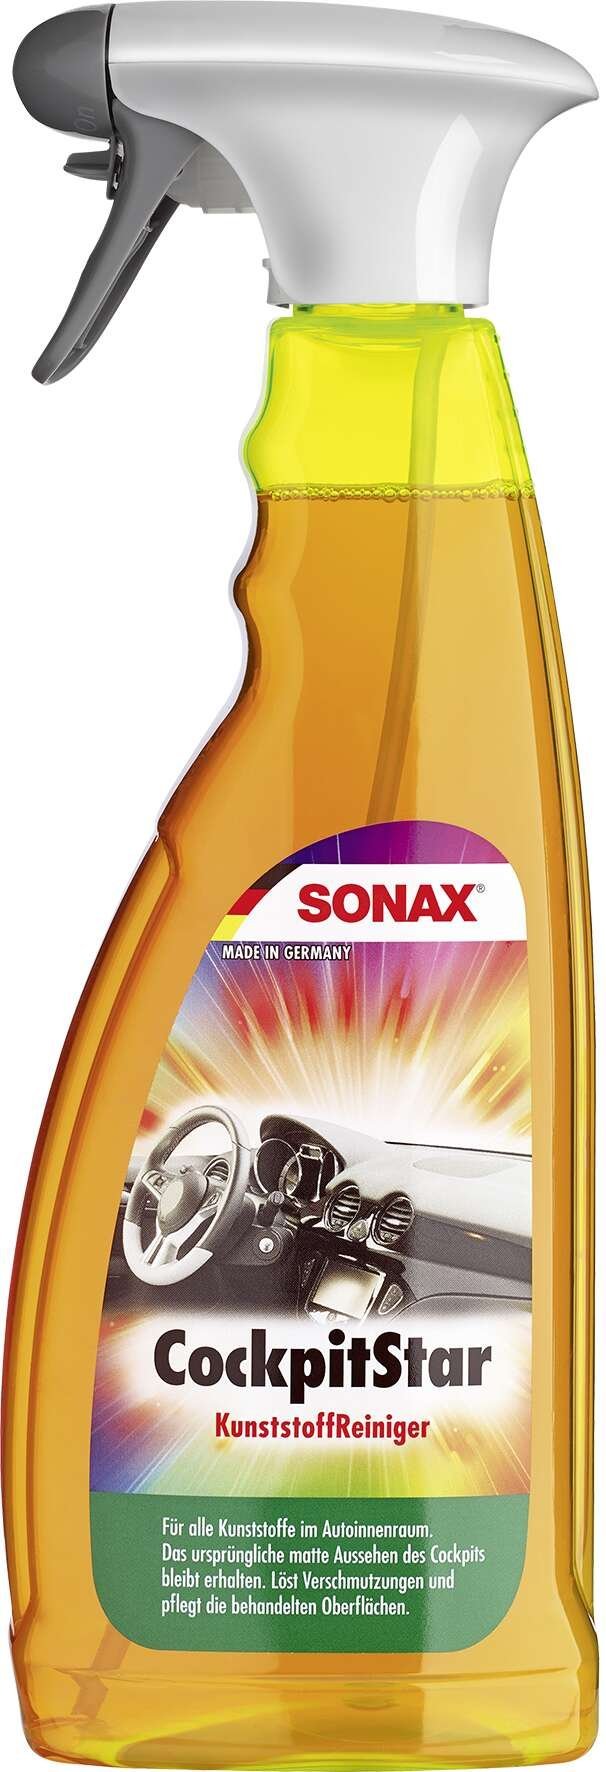 SONAX CockpitStar 750 ml PET spray bottle